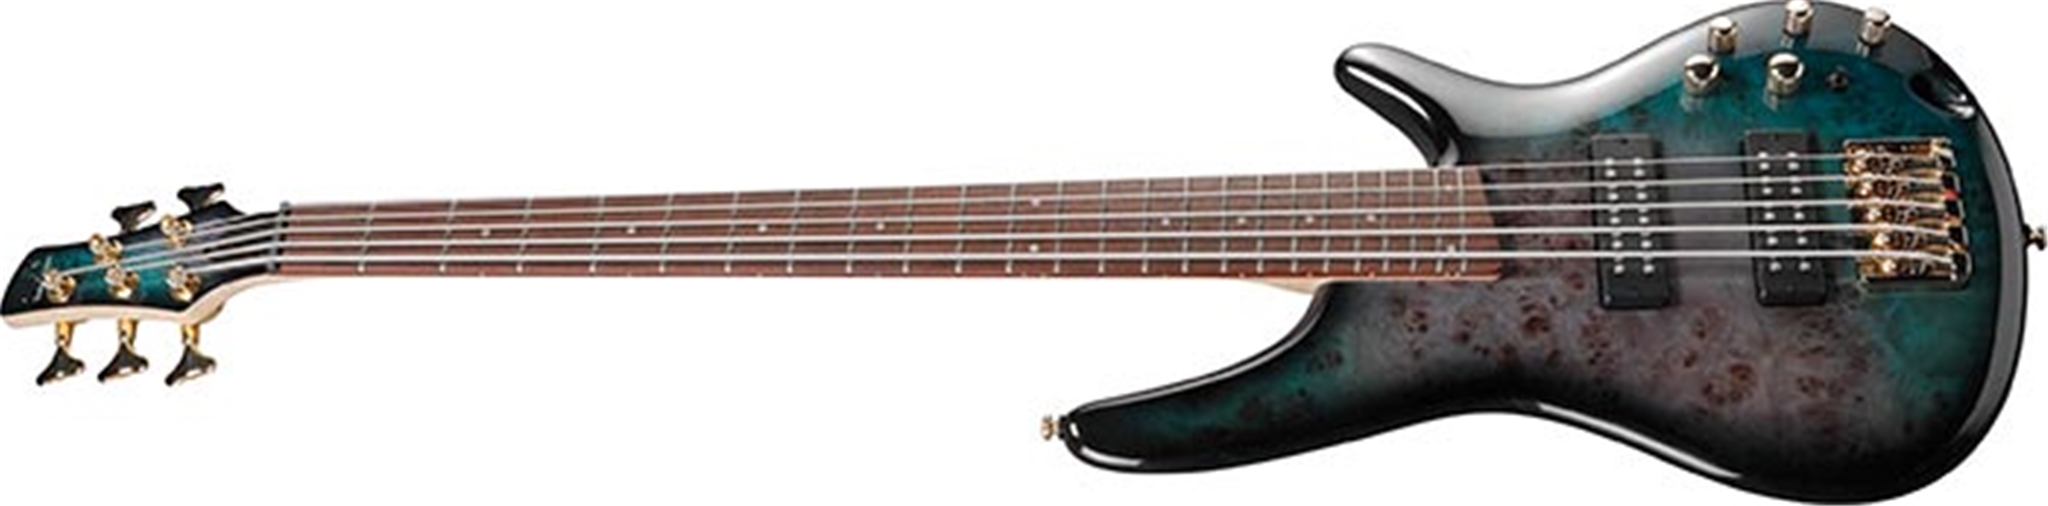 Ibanez  SR405EPBDX Tropical Seafloor Burst  5-String Electric Bass Guitar  